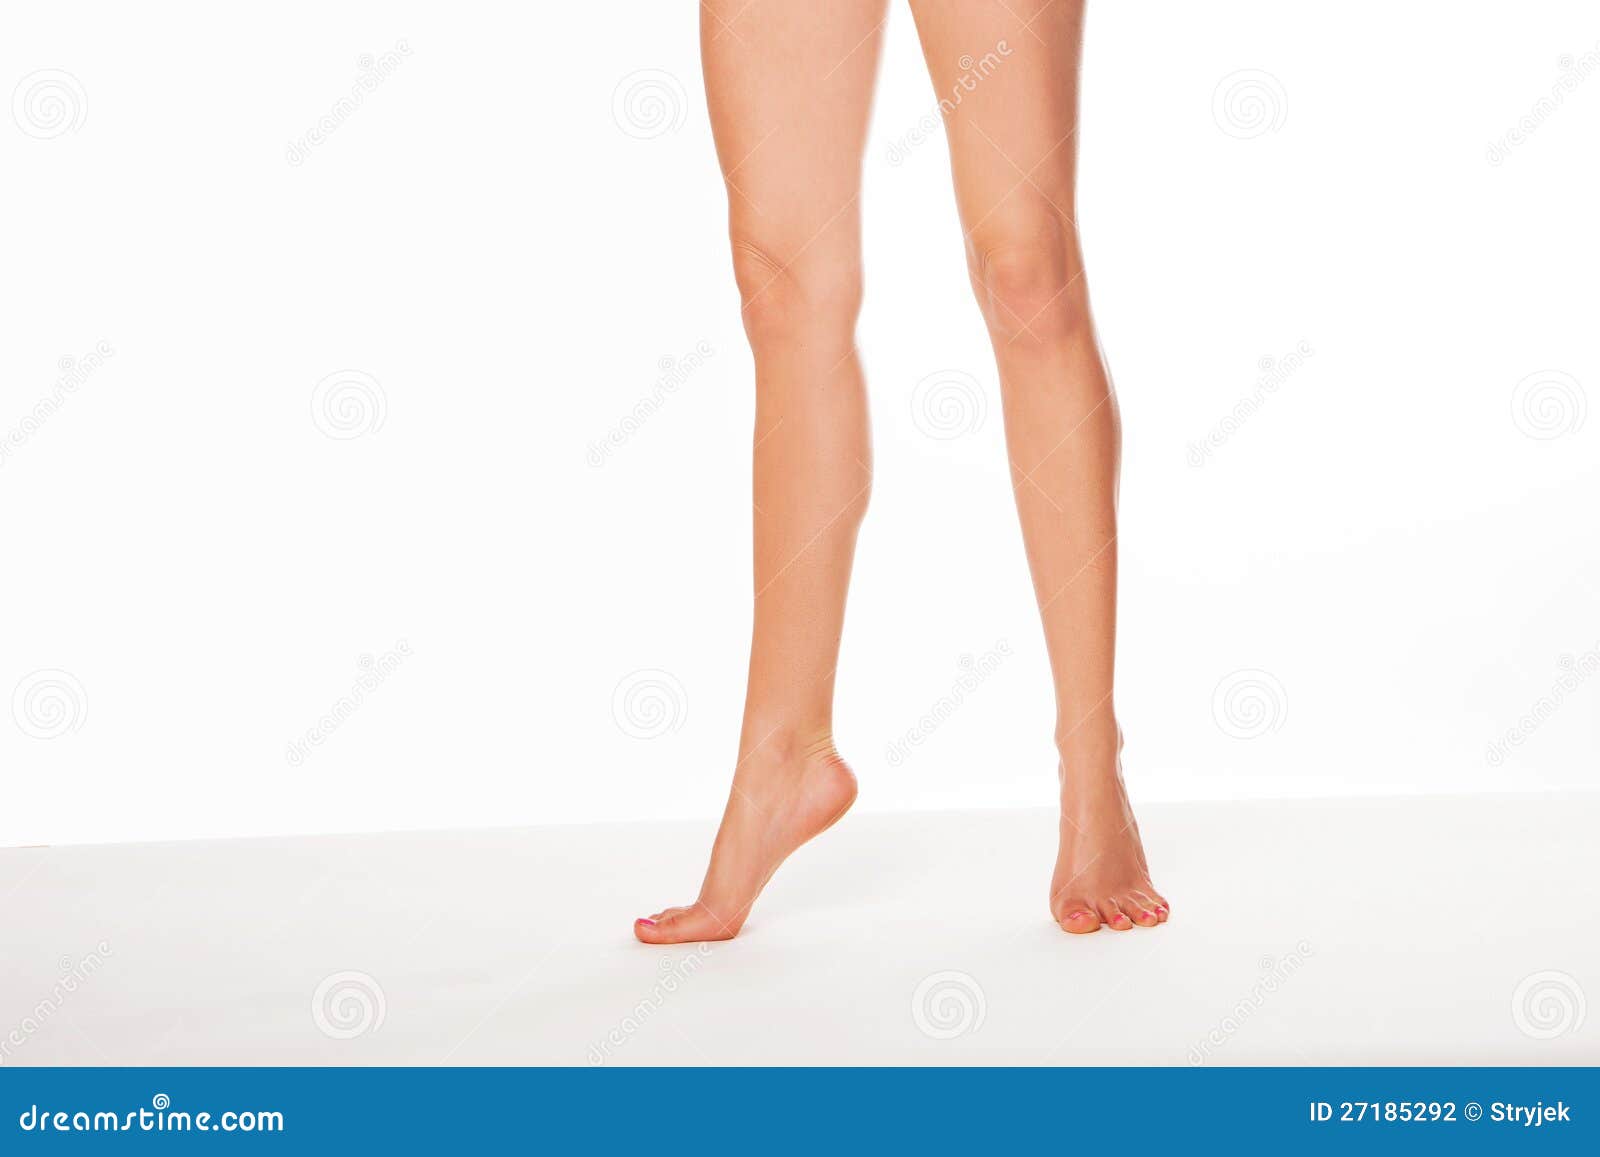 Woman standing on tip toe stock photo. Image of balanced - 27185292